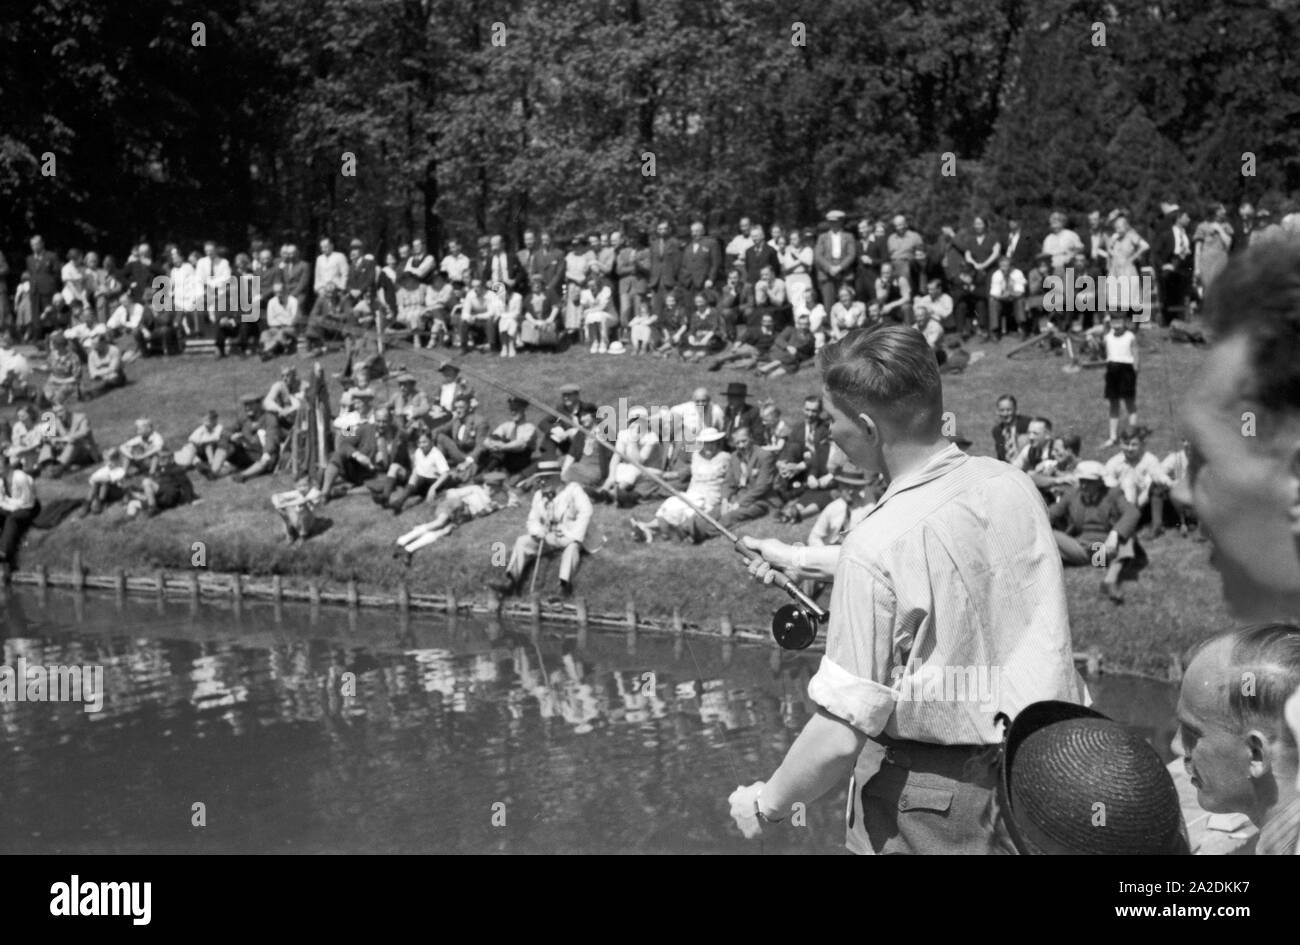 Junger erfahrener Profi Angler angelt an einem Steg, Deutschland, 1930er Jahre. Young professional fisherman fishing on the shore of a lake, Germany 1930s. Stock Photo